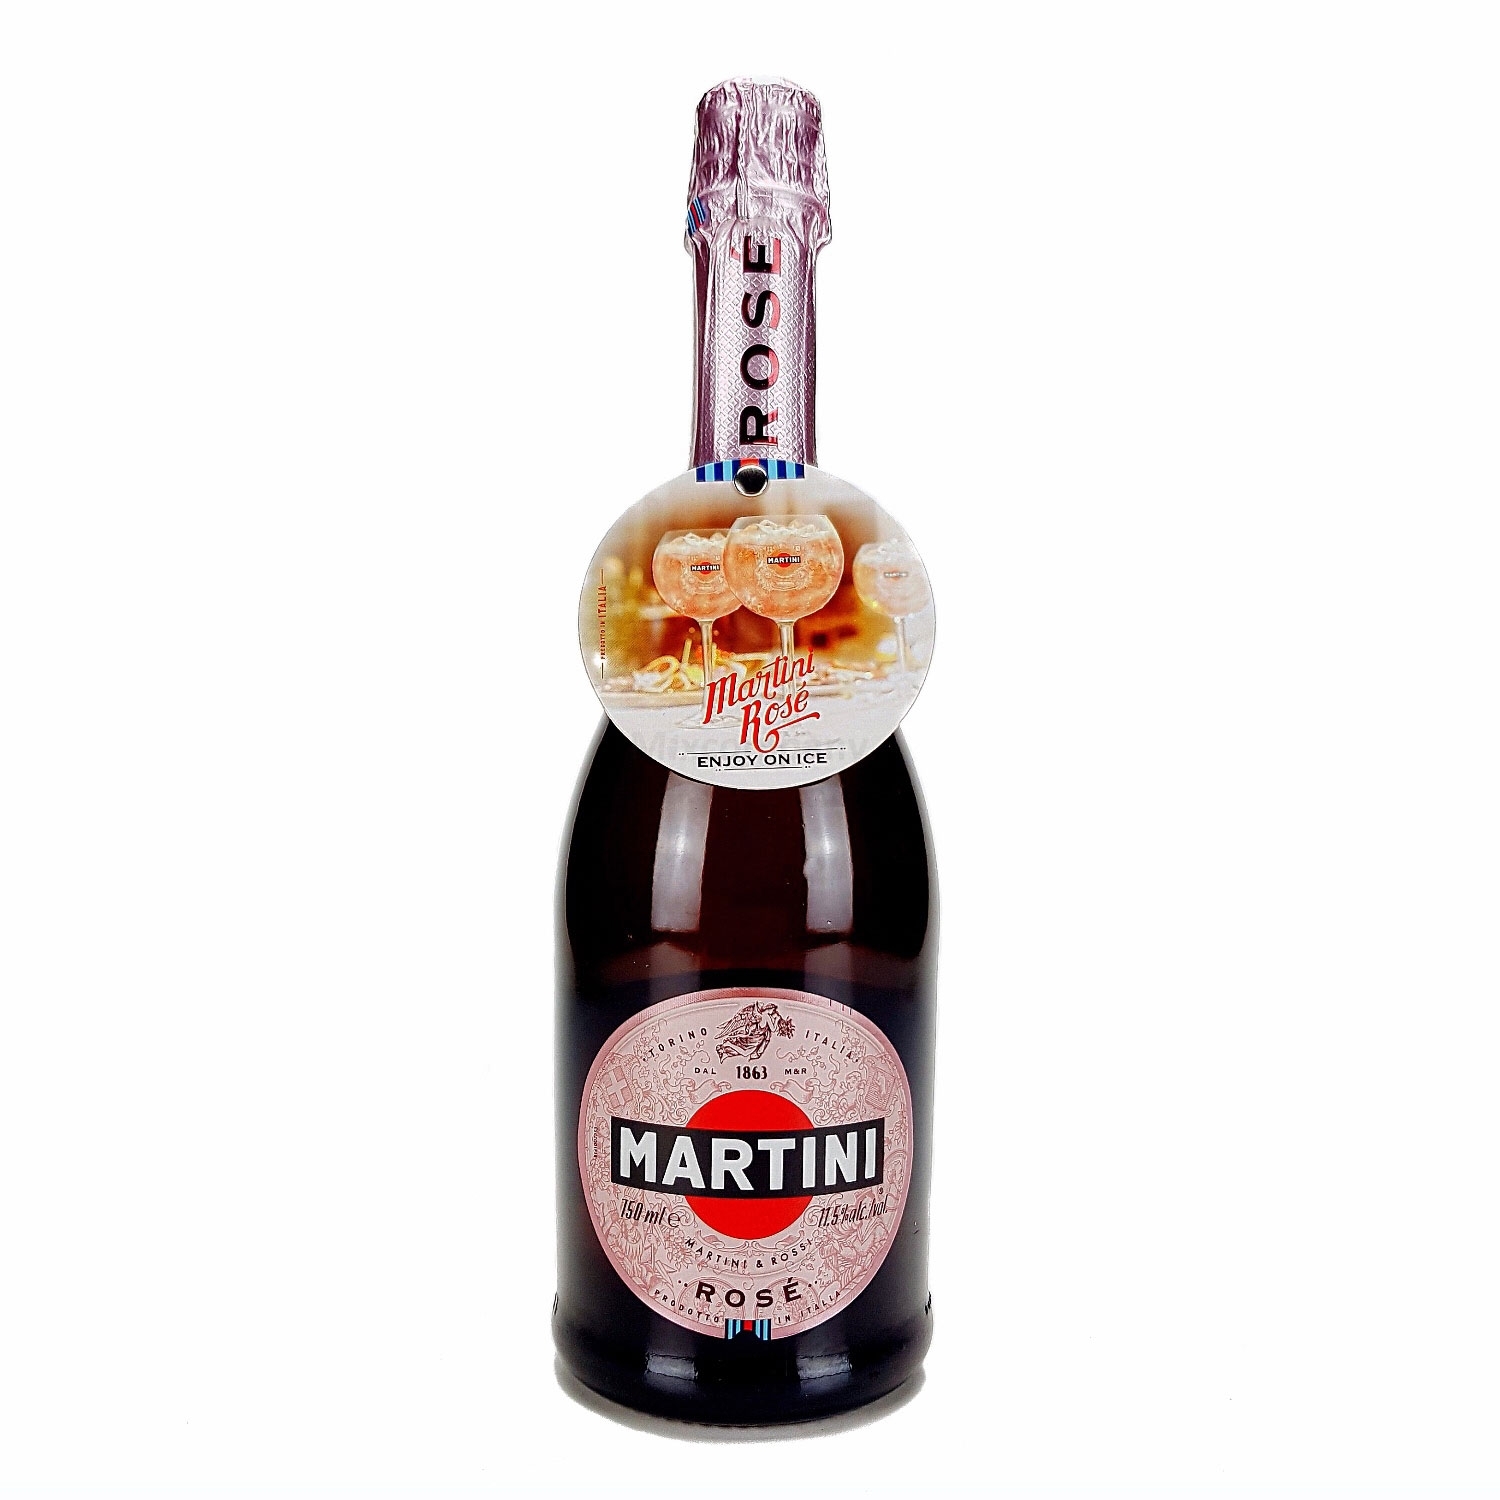 Martini Rose 750ml 0,75l (11,5% Vol) -[Enthält Sulfite]